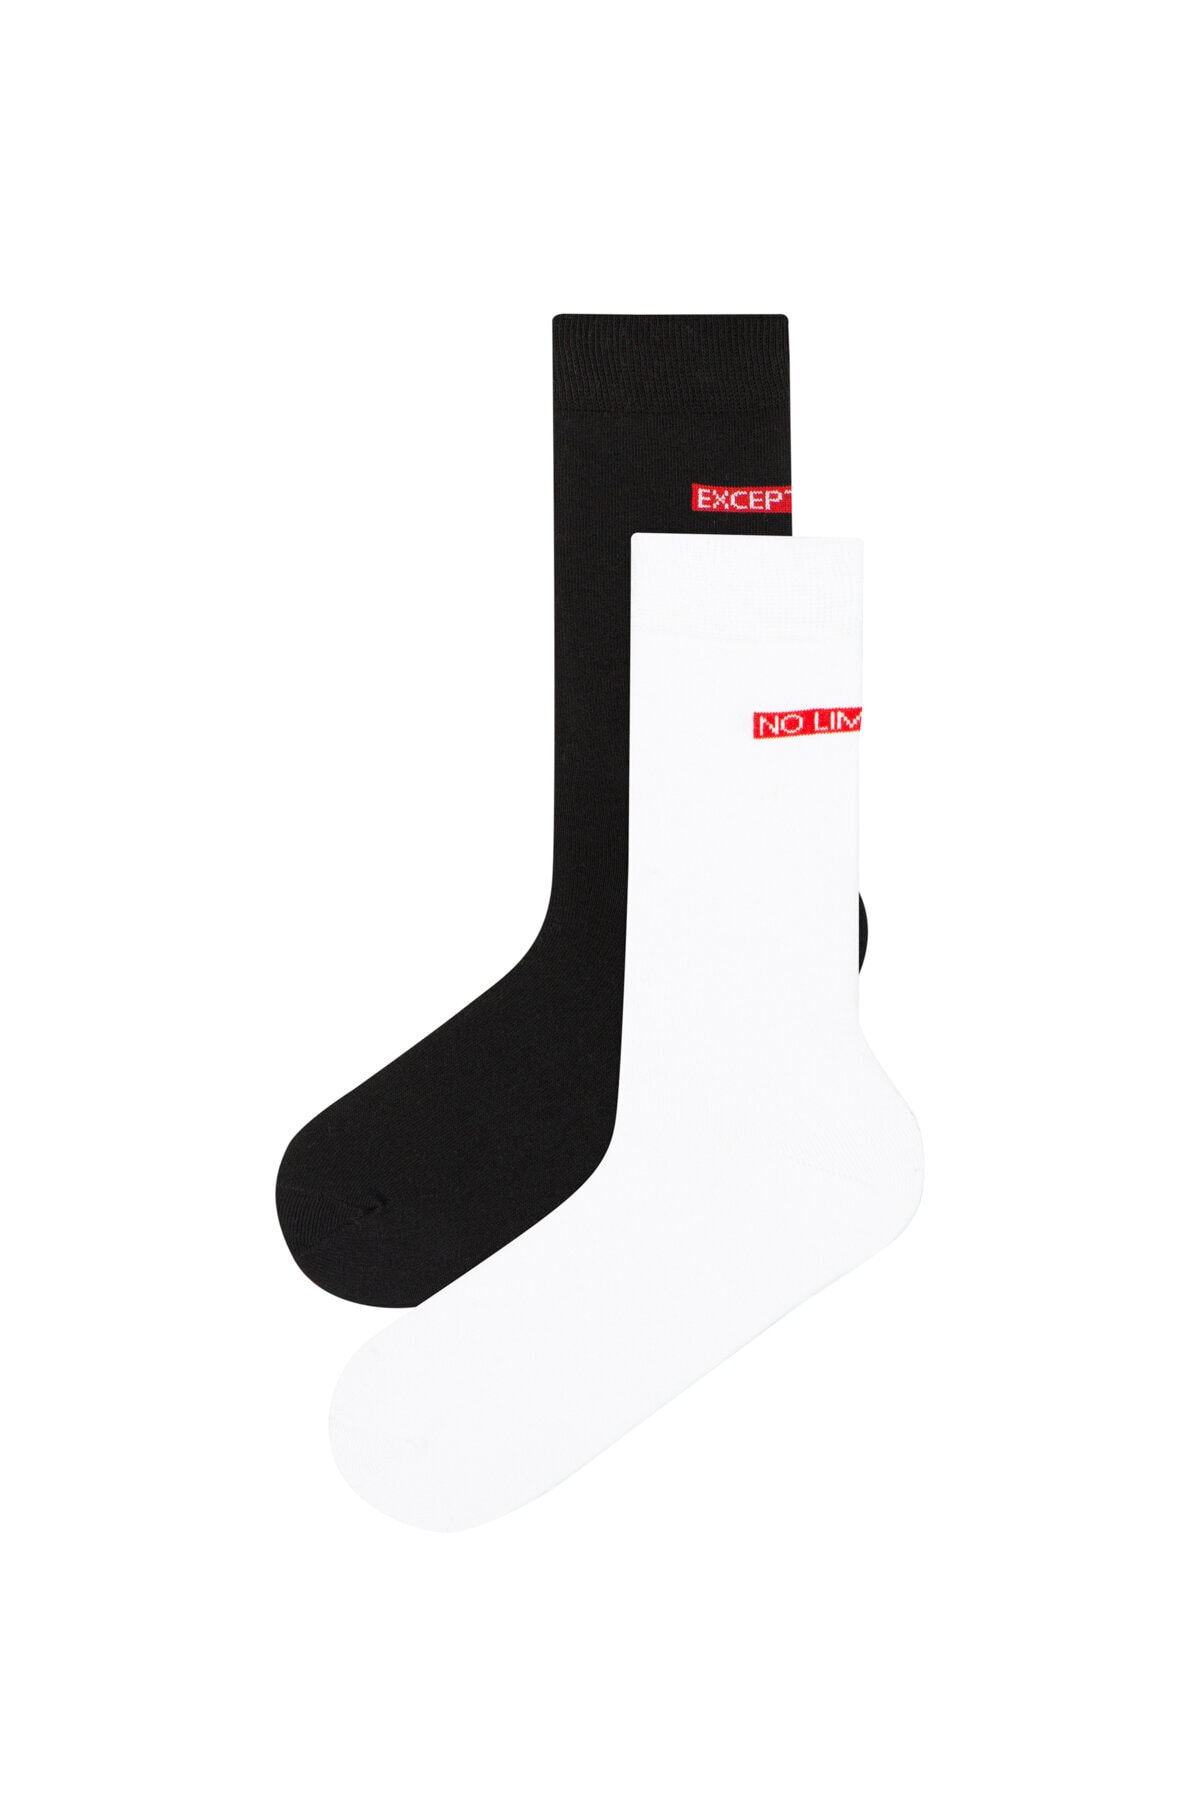 Penti Siyah Beyaz Erkek Slogan Soket Çorap 2'li